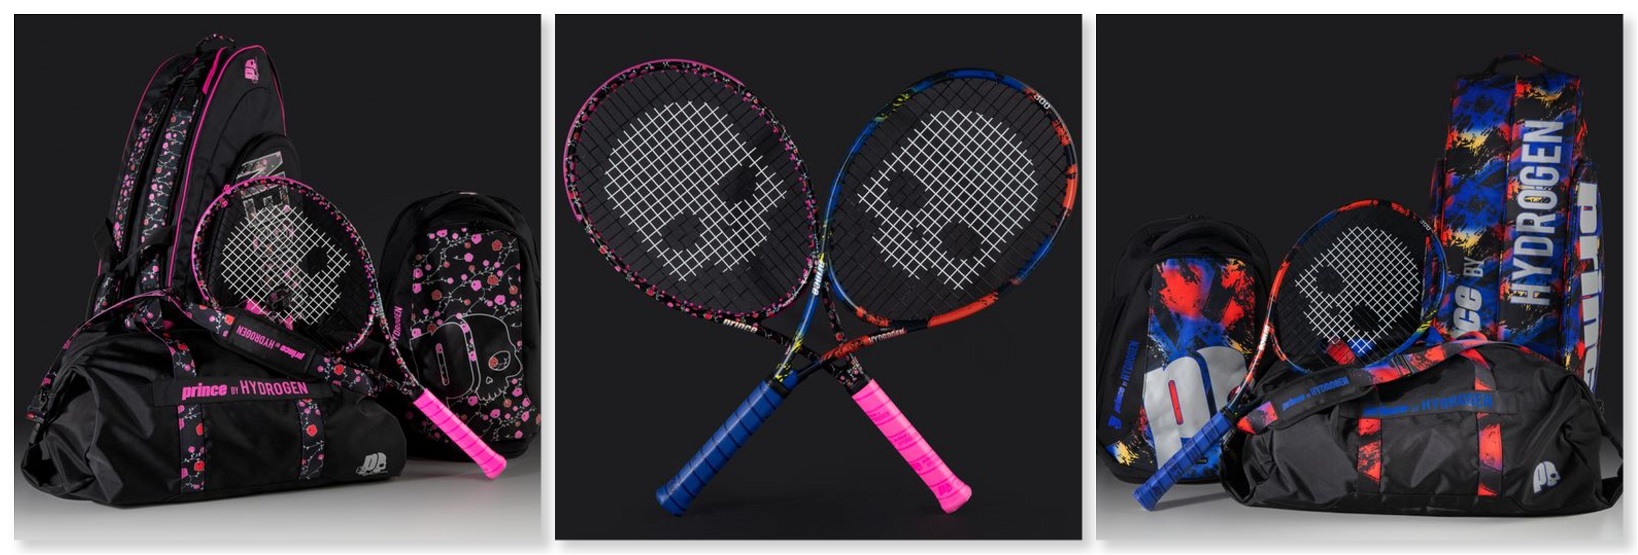 raquette tennis prince by hydrogen sur protennis